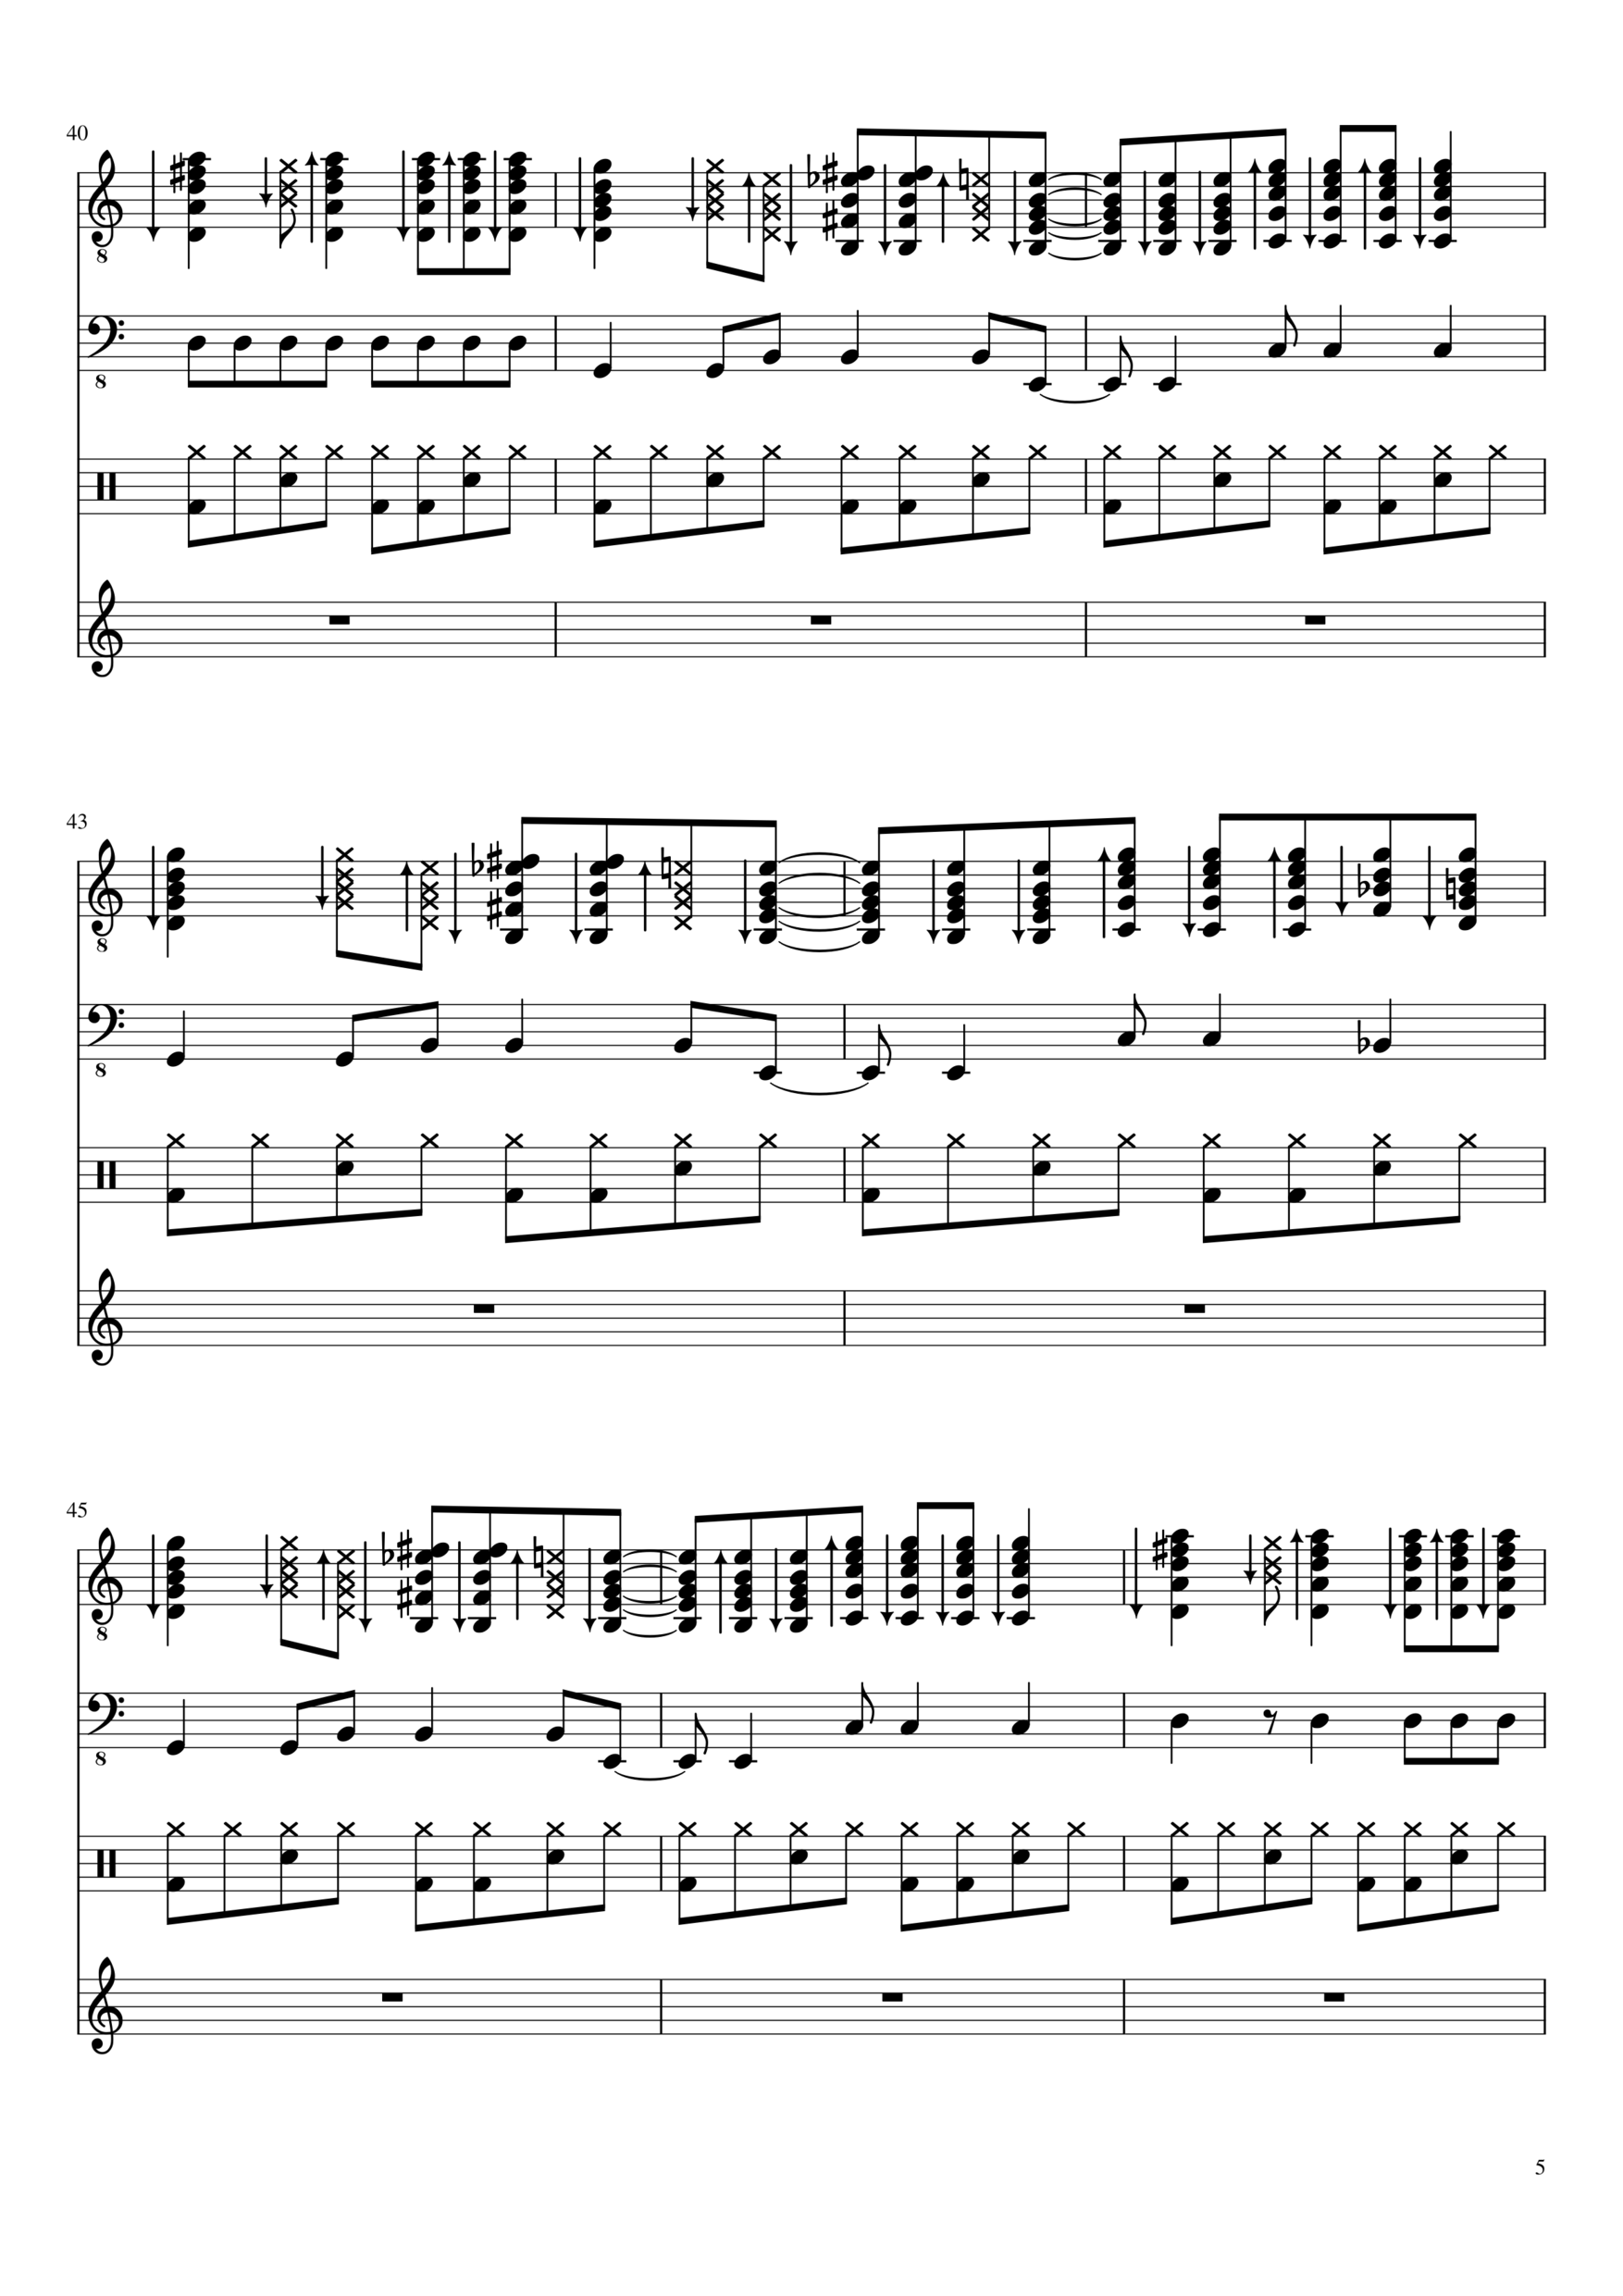 Skvoz dyiru v moey golove slide, Image 5